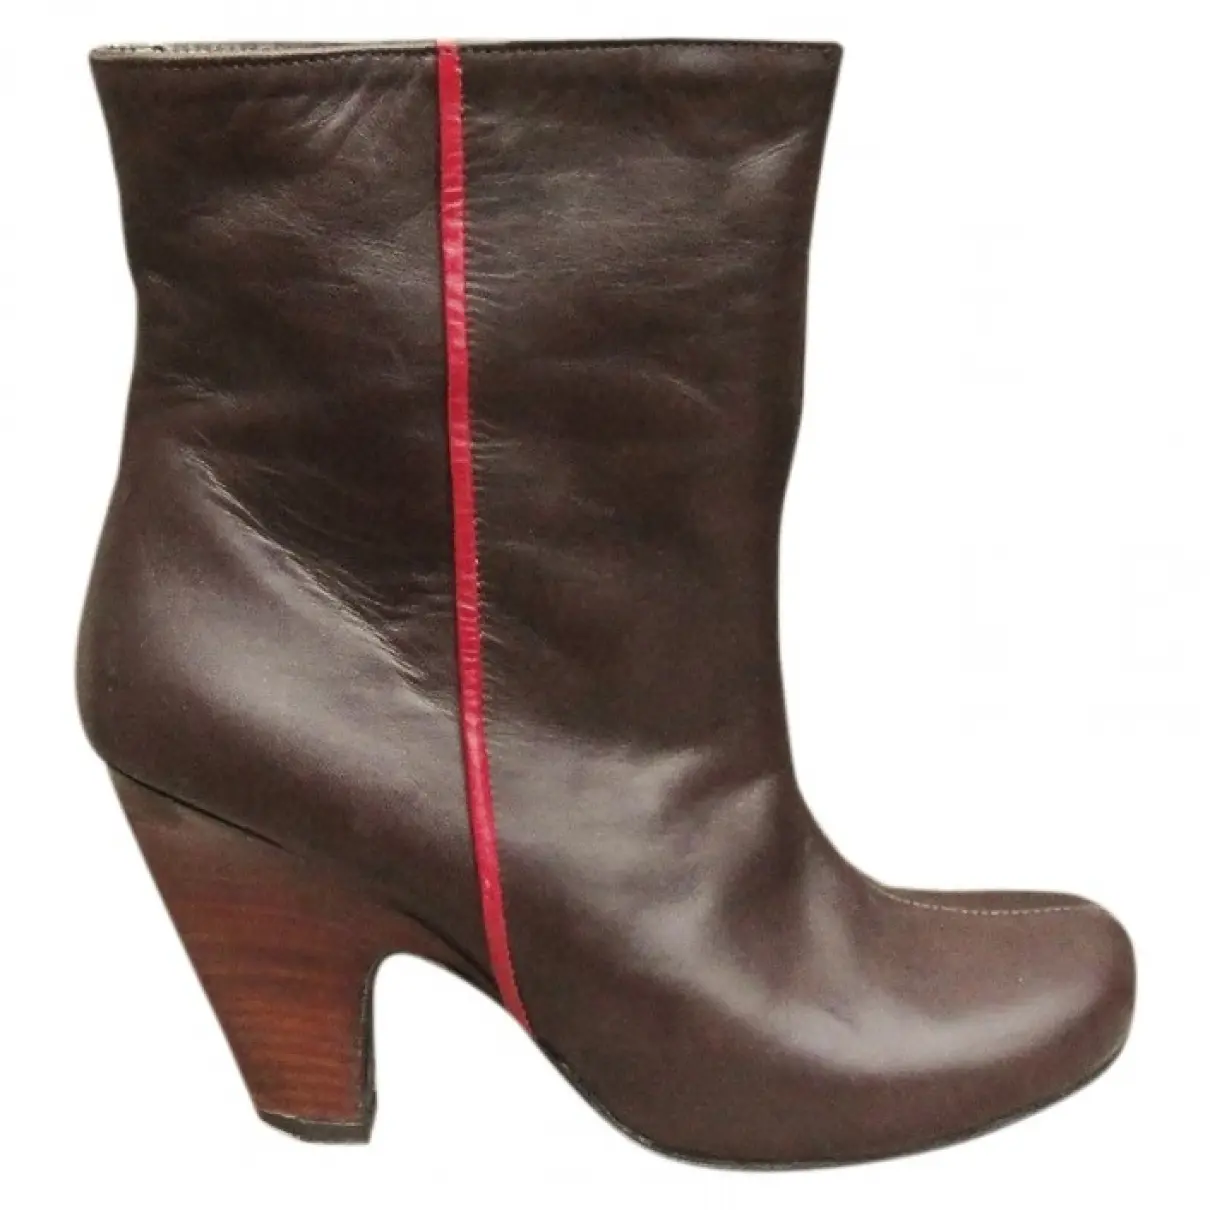 Leather ankle boots Karine Arabian